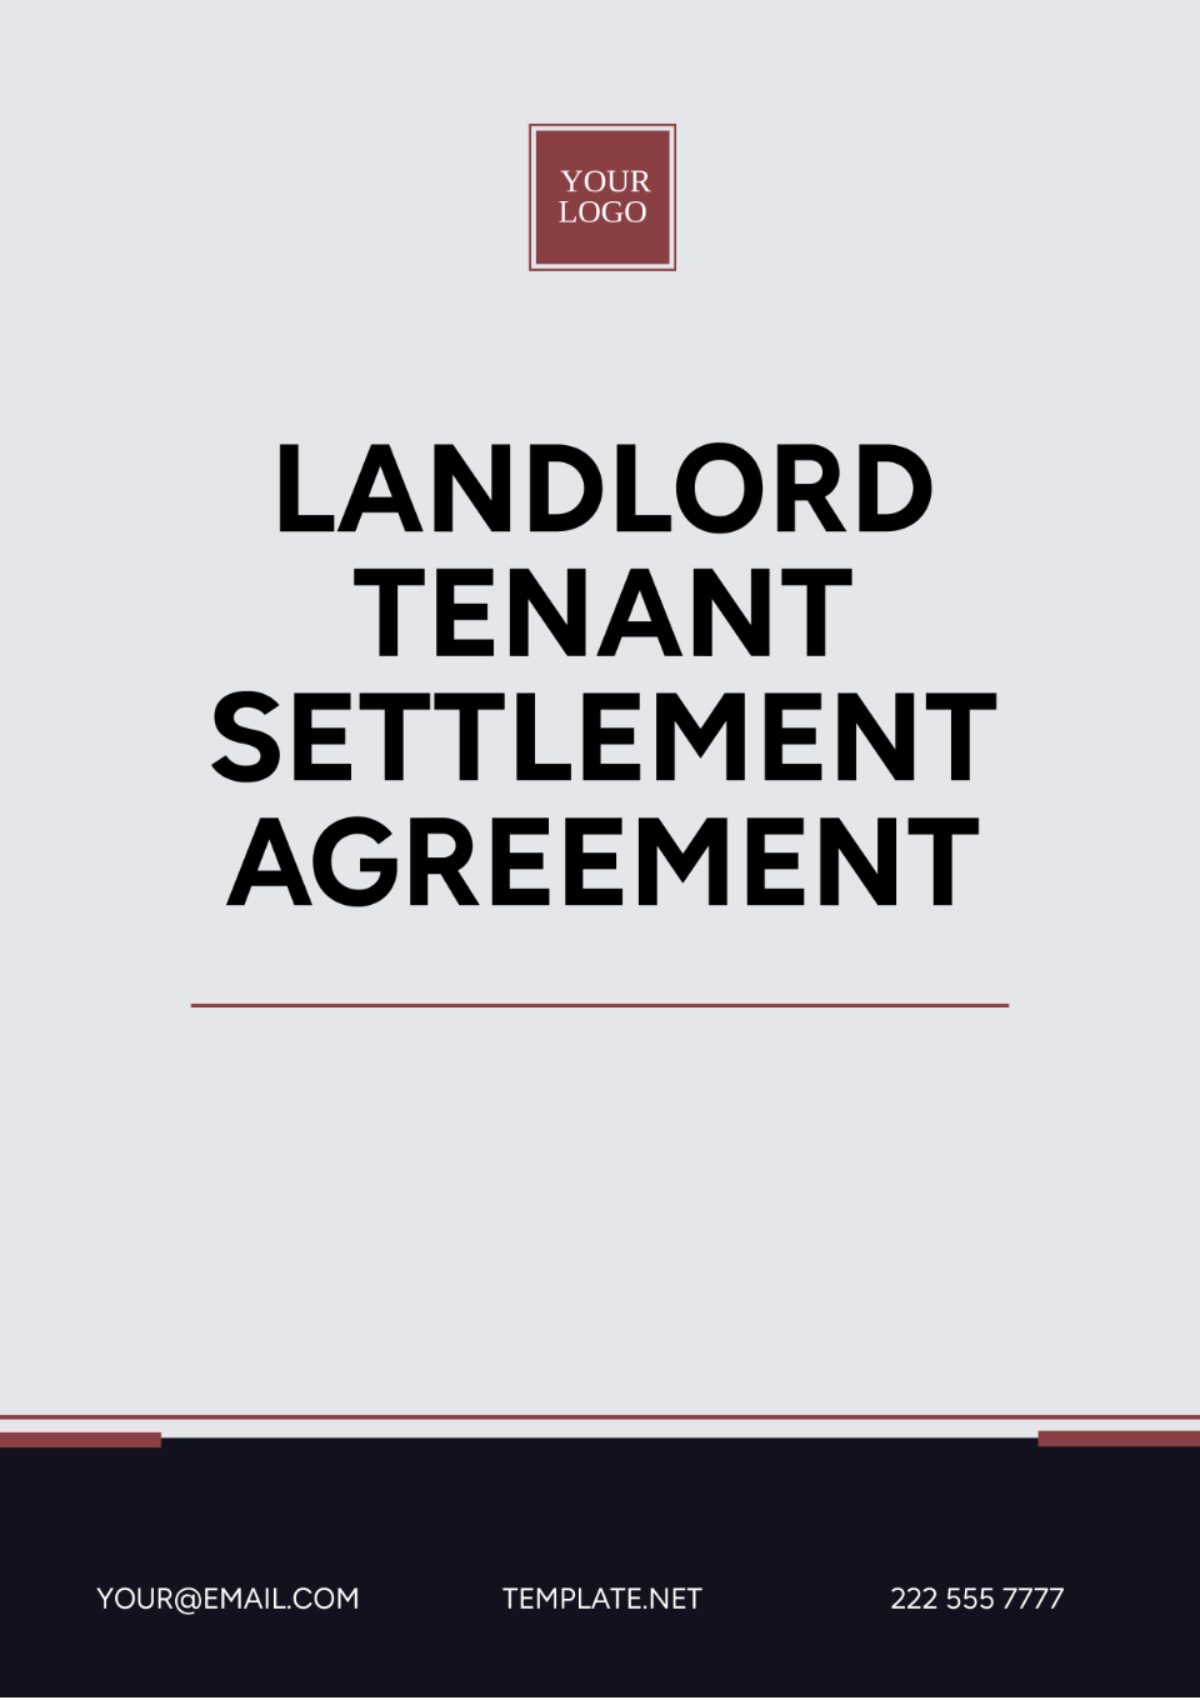 Free Landlord Tenant Settlement Agreement Template